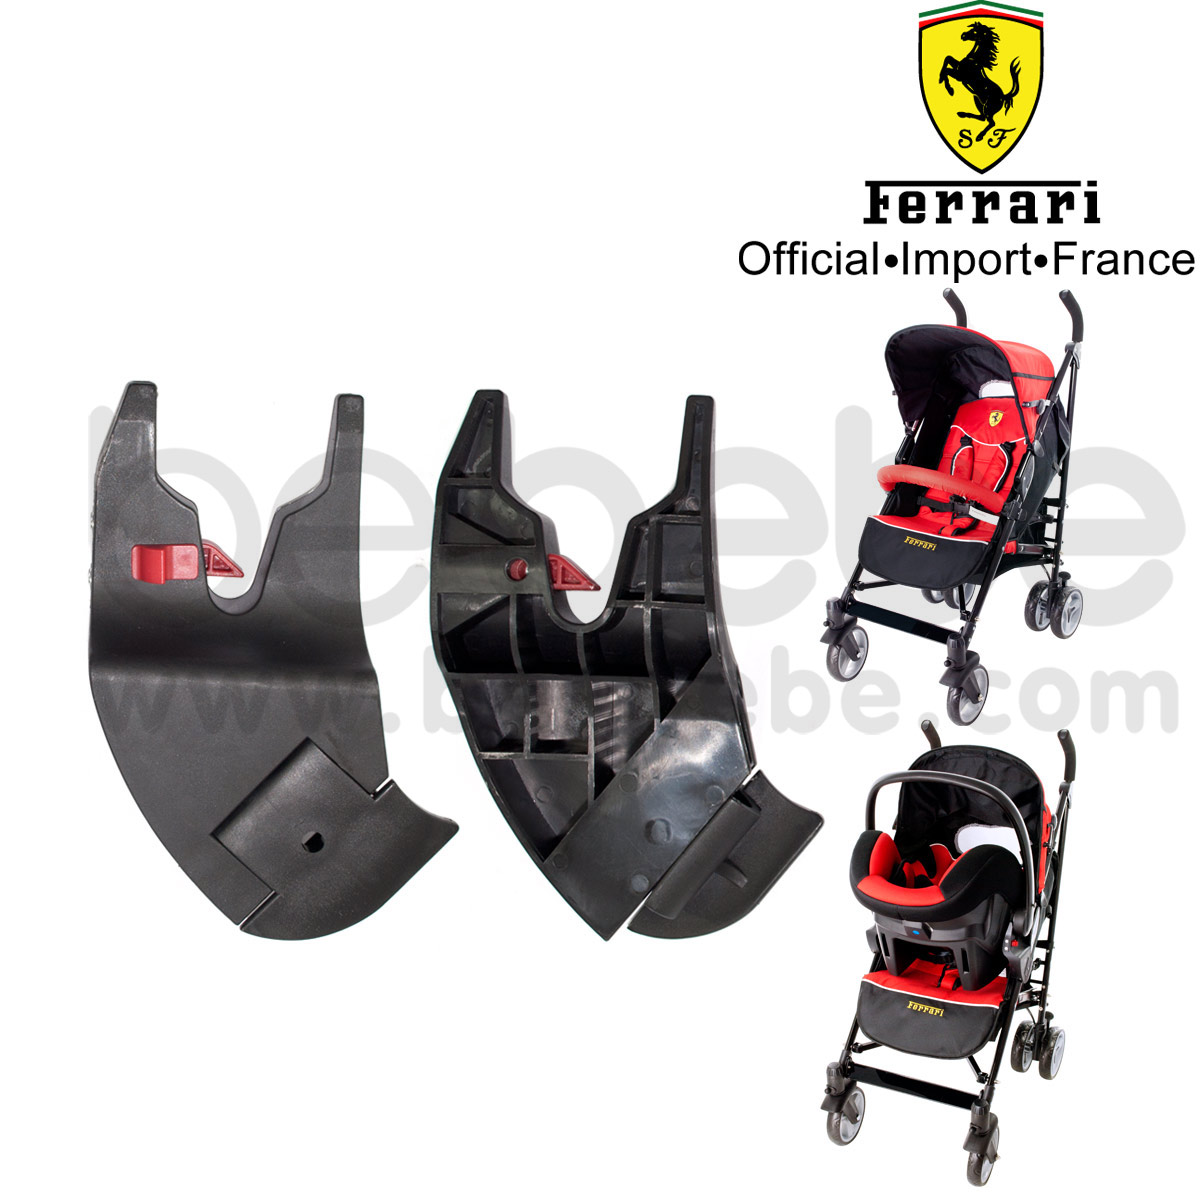 Ferrari : Adaptor Storller Subway/Car seat